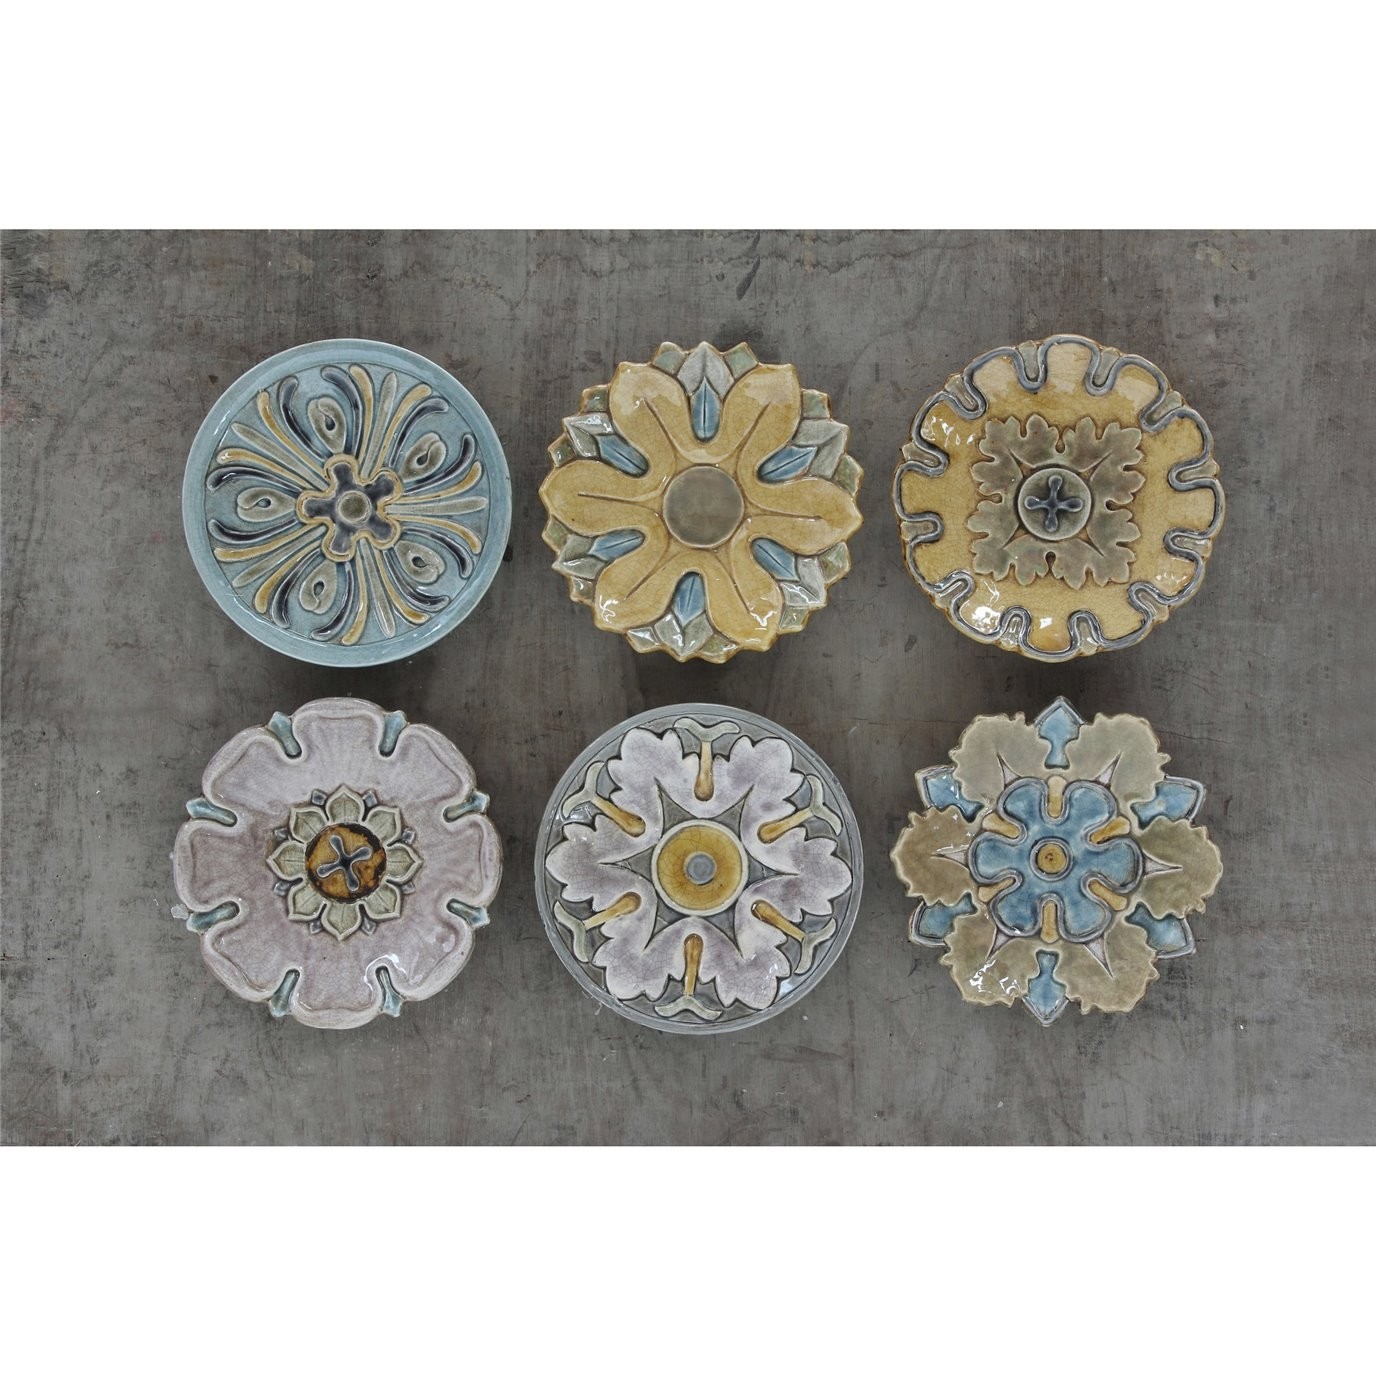 Unique decorative wall plates set of 6 designs by 1